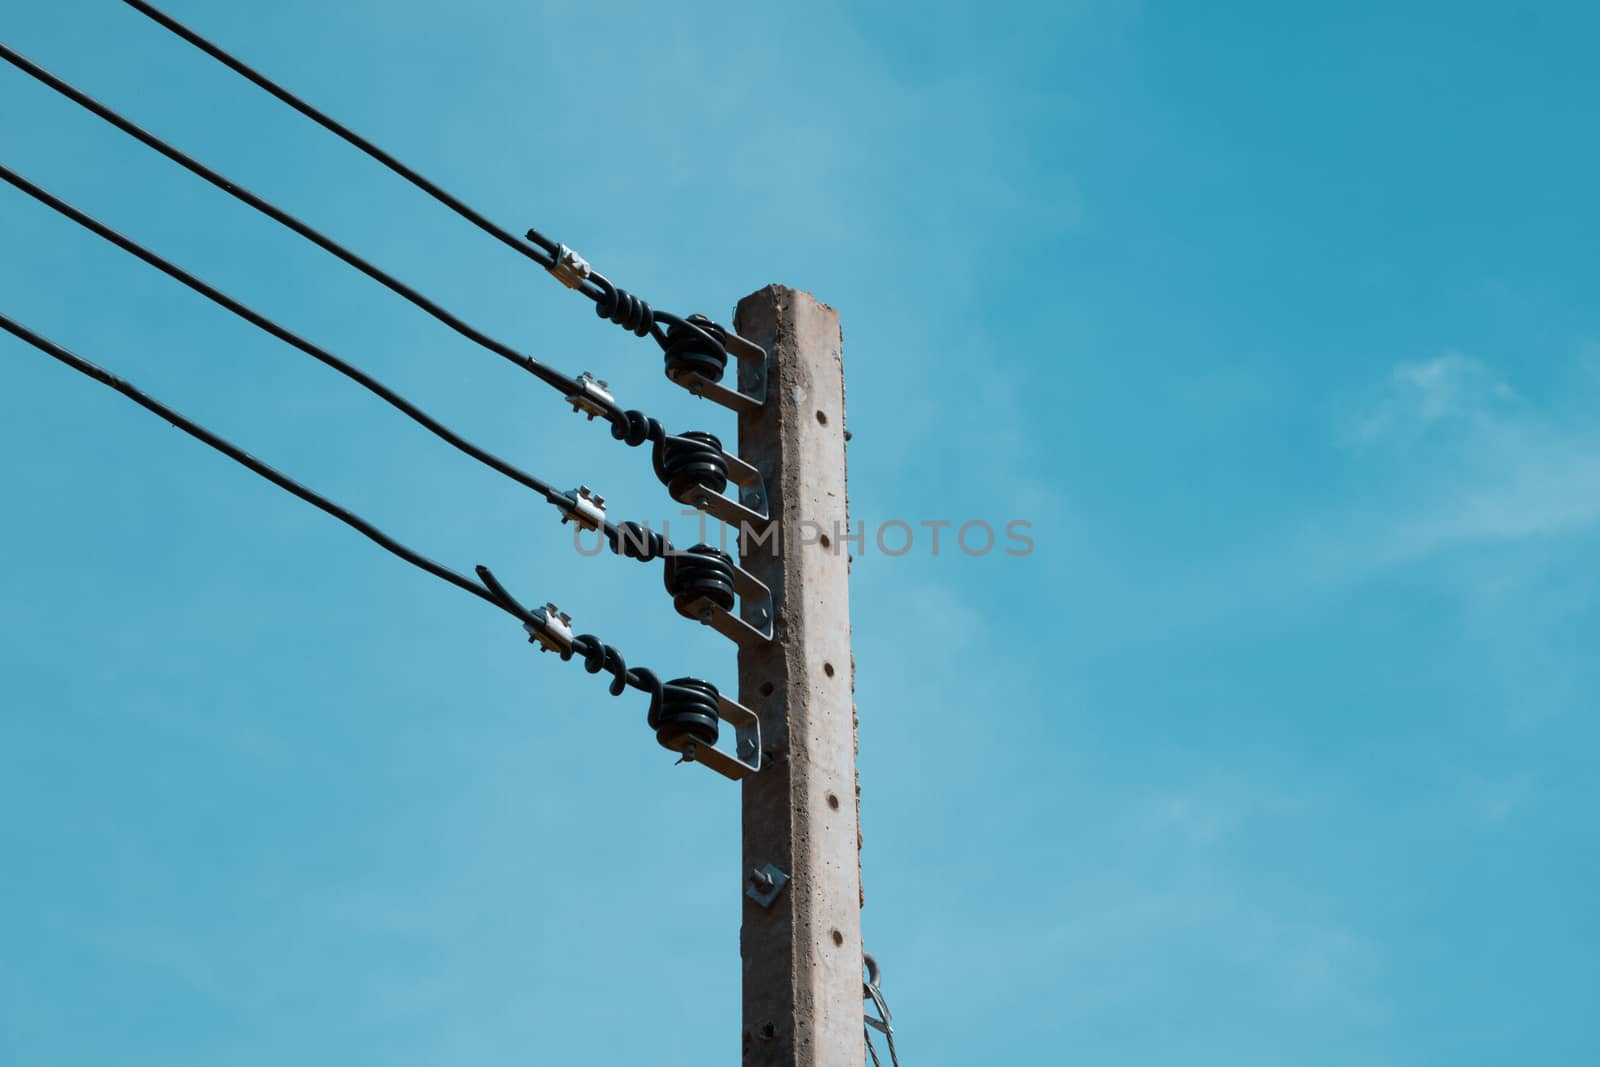 Beautiful electric pole, sky background by N_u_T